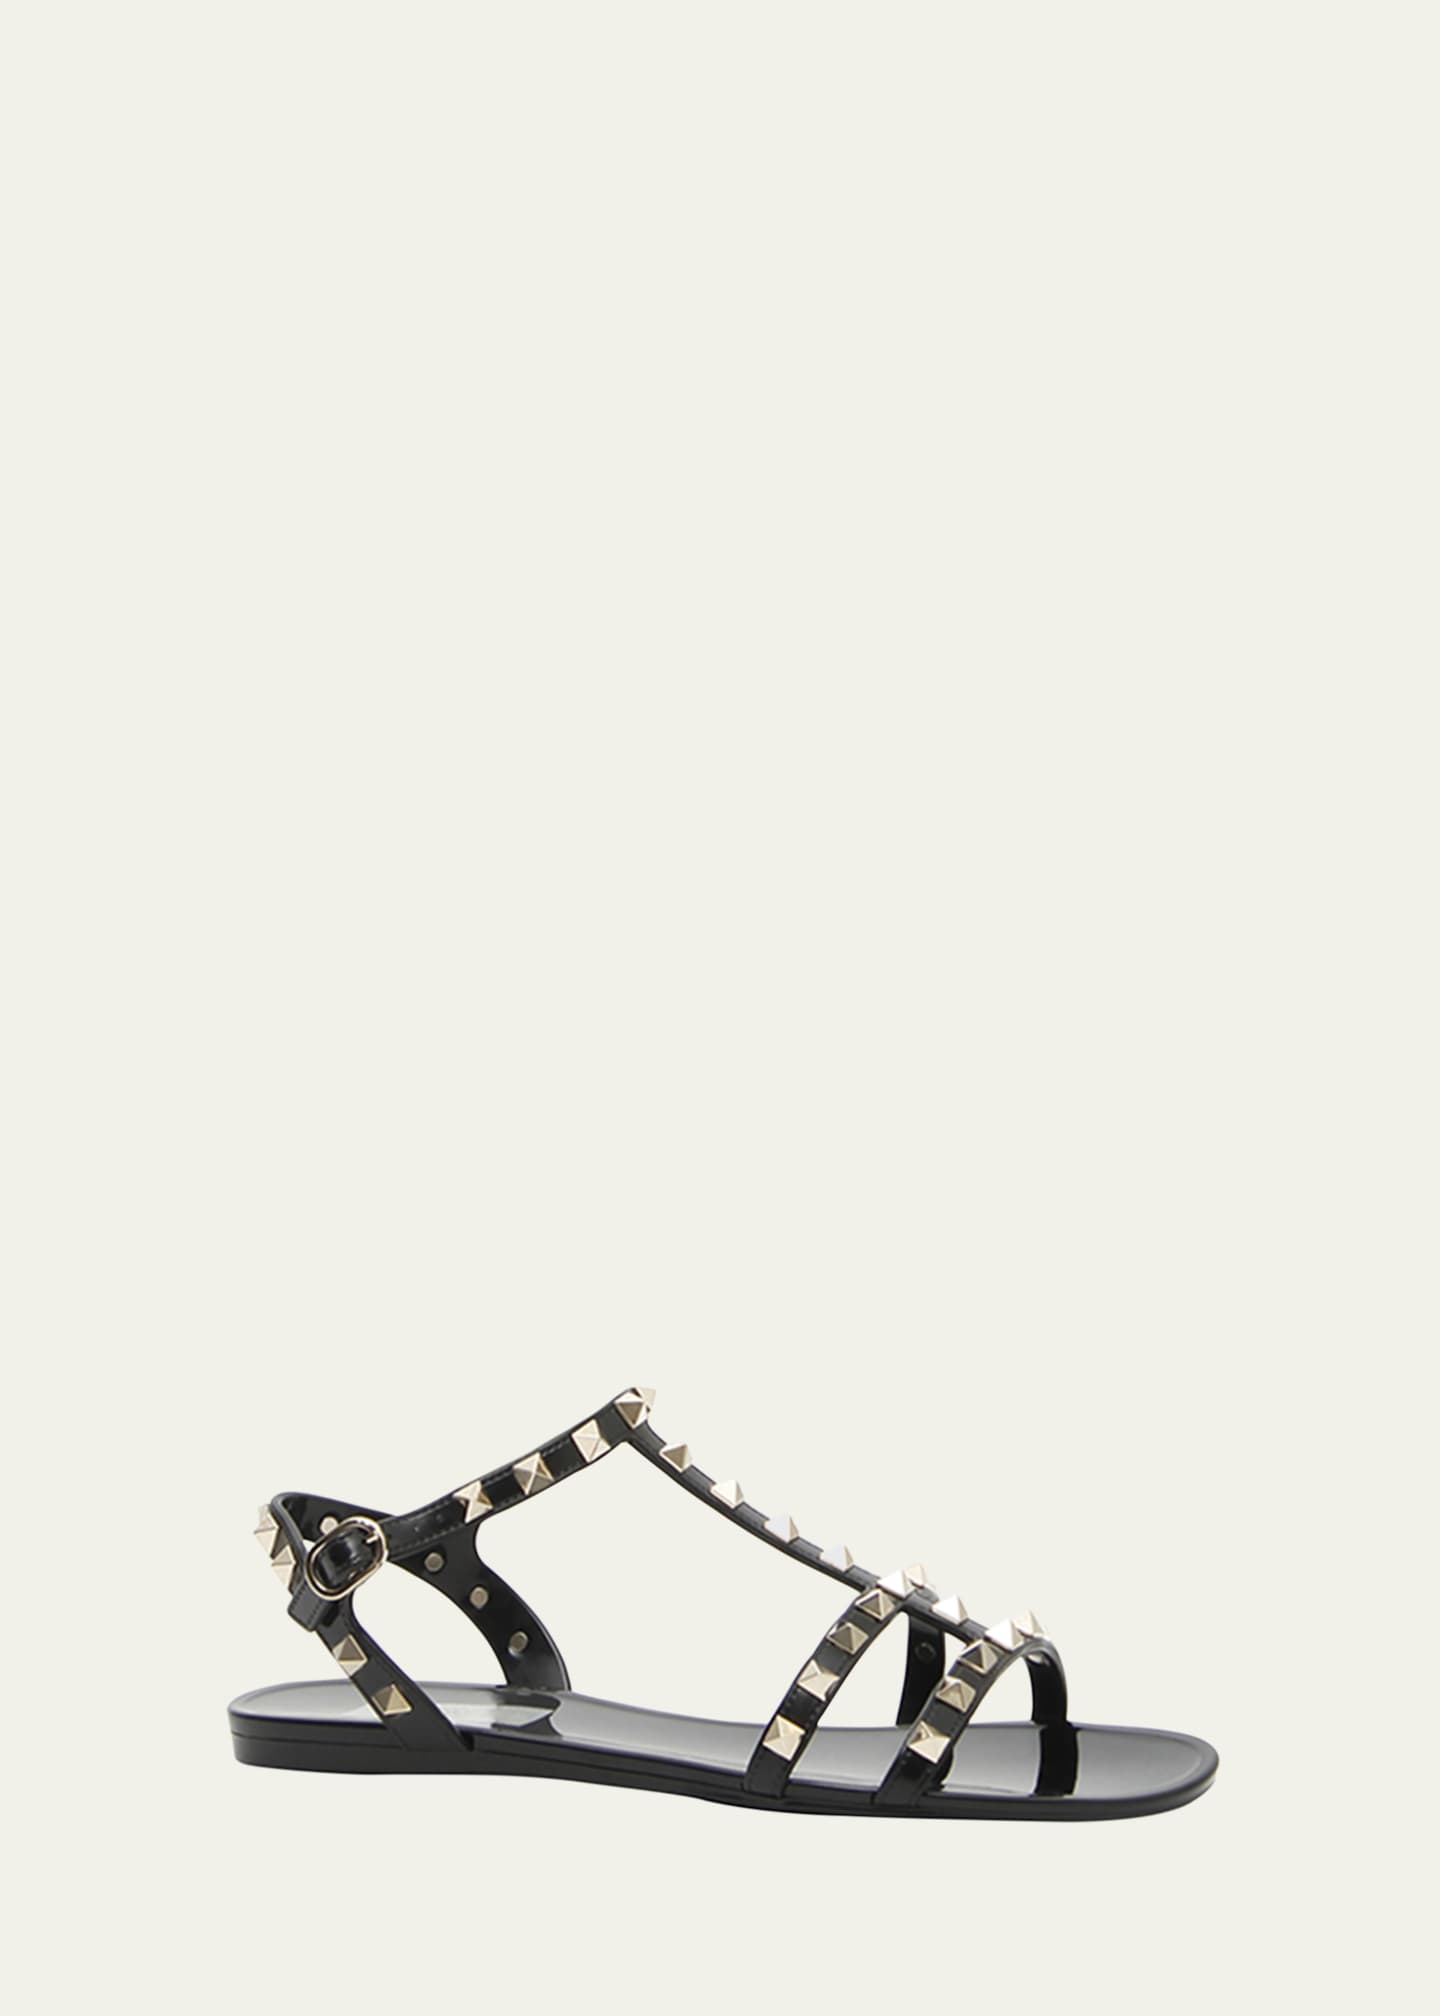 Valentino Garavani Rockstud Jelly Flat Gladiator Sandals Image 1 of 6